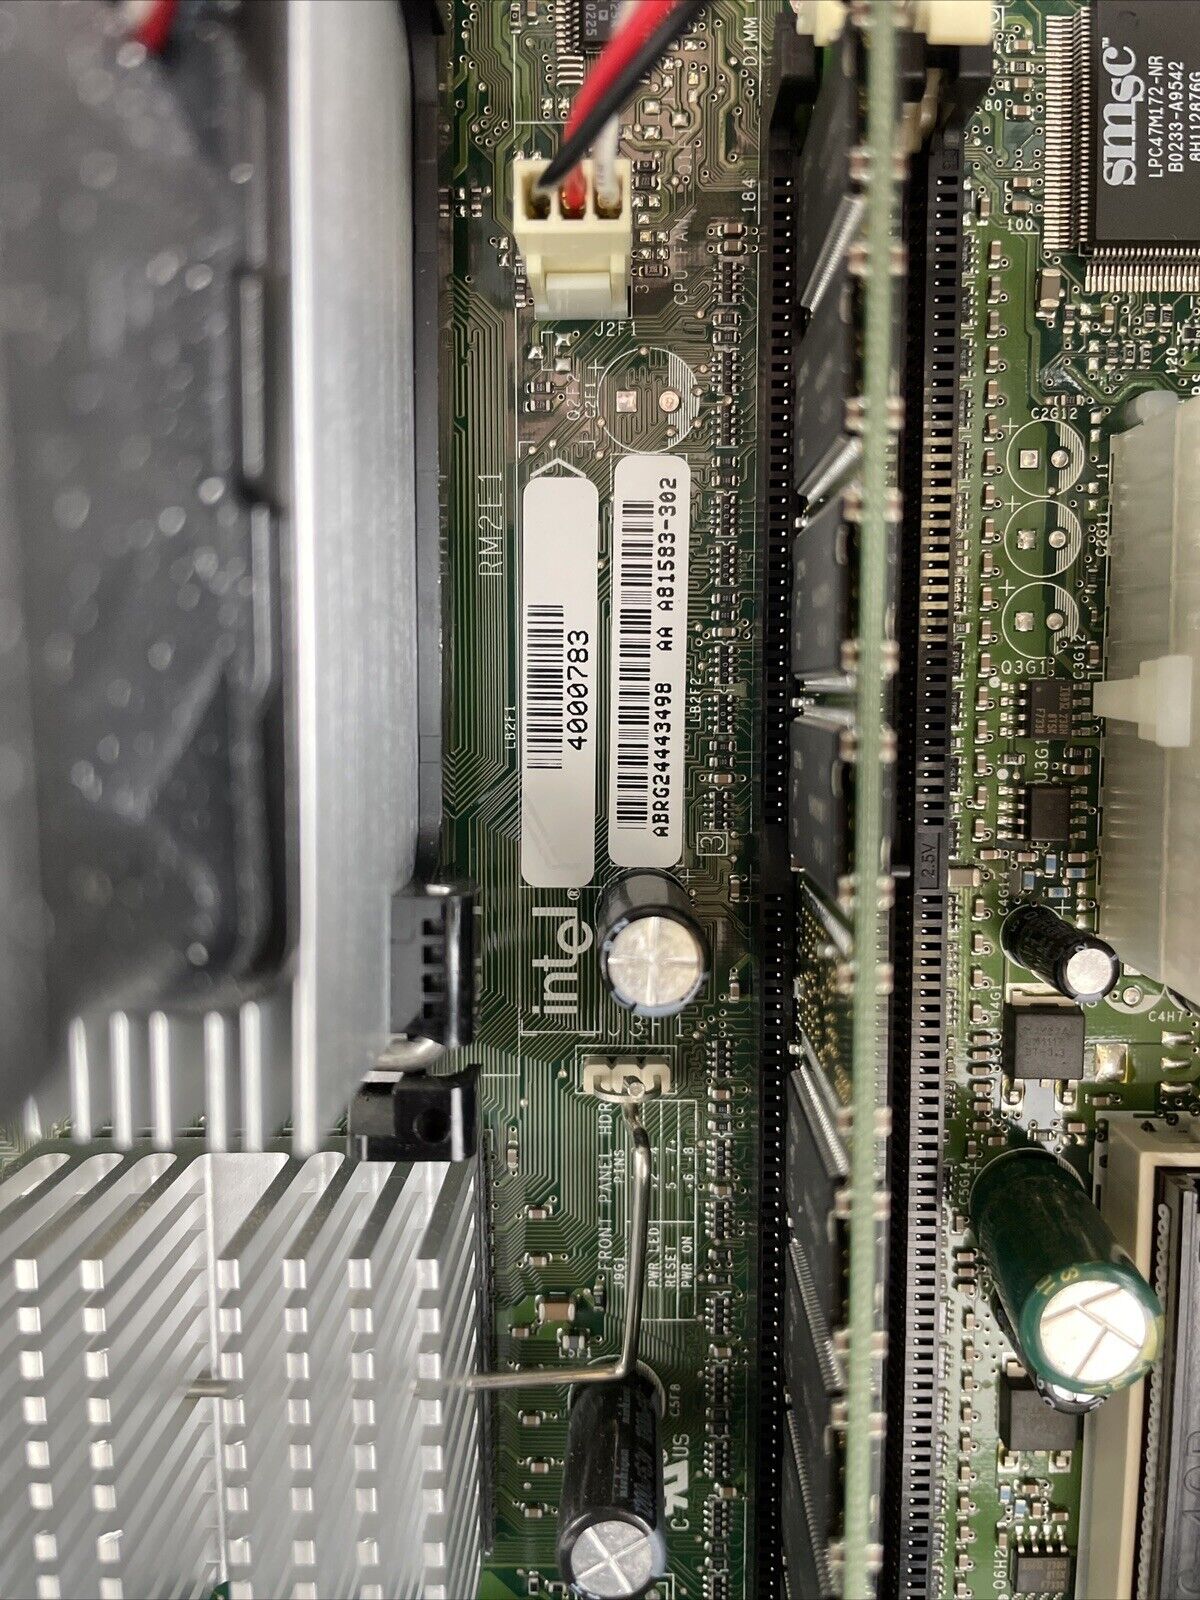 Gateway E-4000 MT Intel Pentium 4 2.4GHz 512MB RAM No HDD No OS